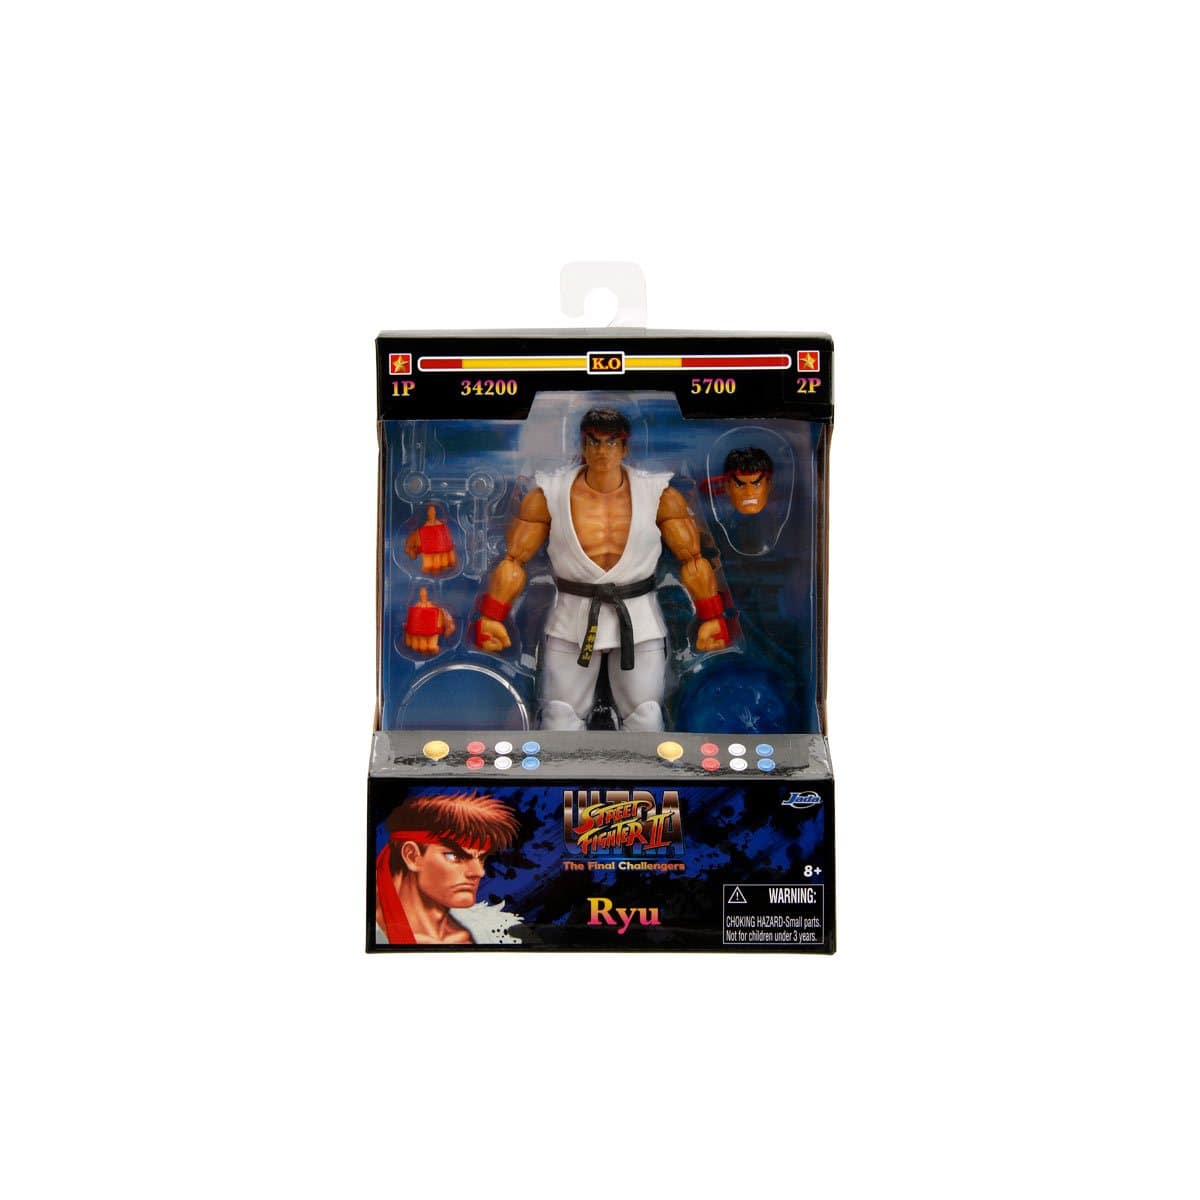 JadaToys-Ultra-Street-Fighter-II-Ryu-Action-Figure-box-art-display-window-retro-arcade-game-packaging